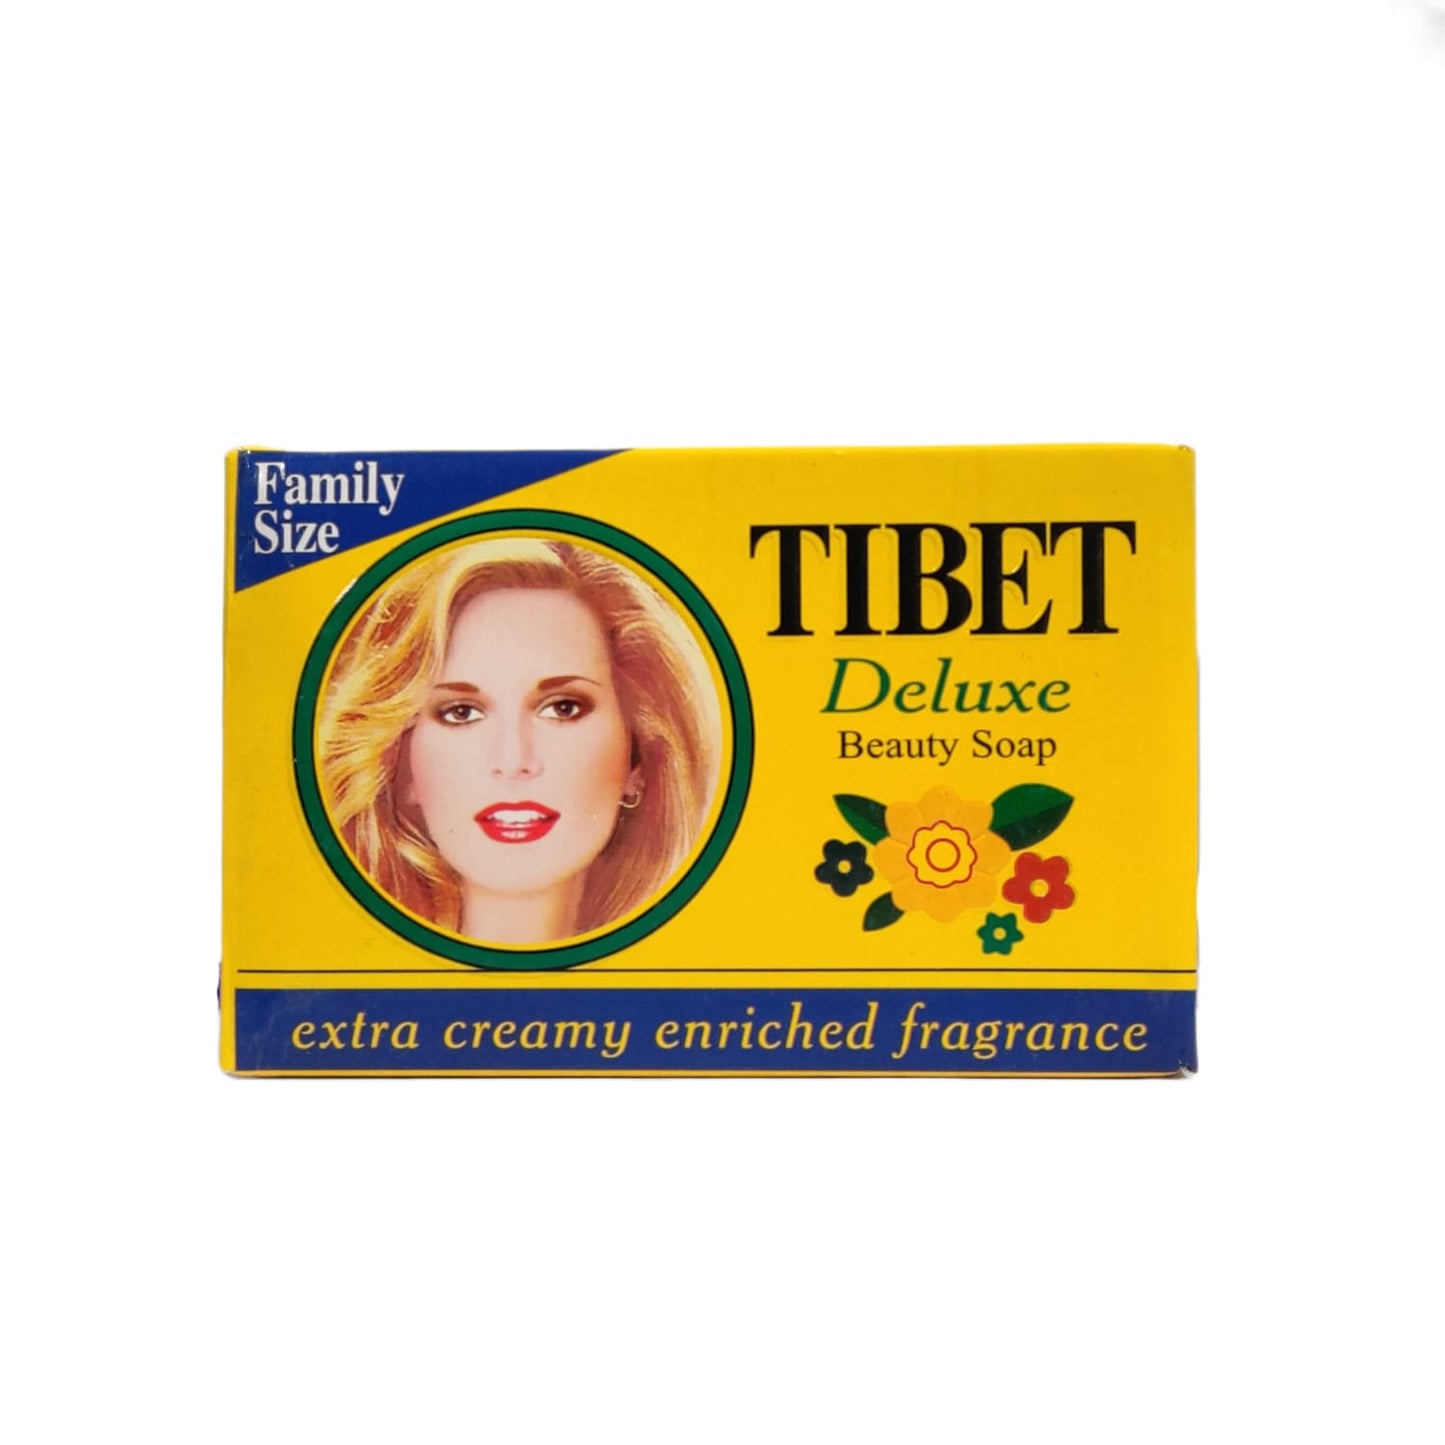 Tibet Deluxe Beauty Soap Family Size 125 gm